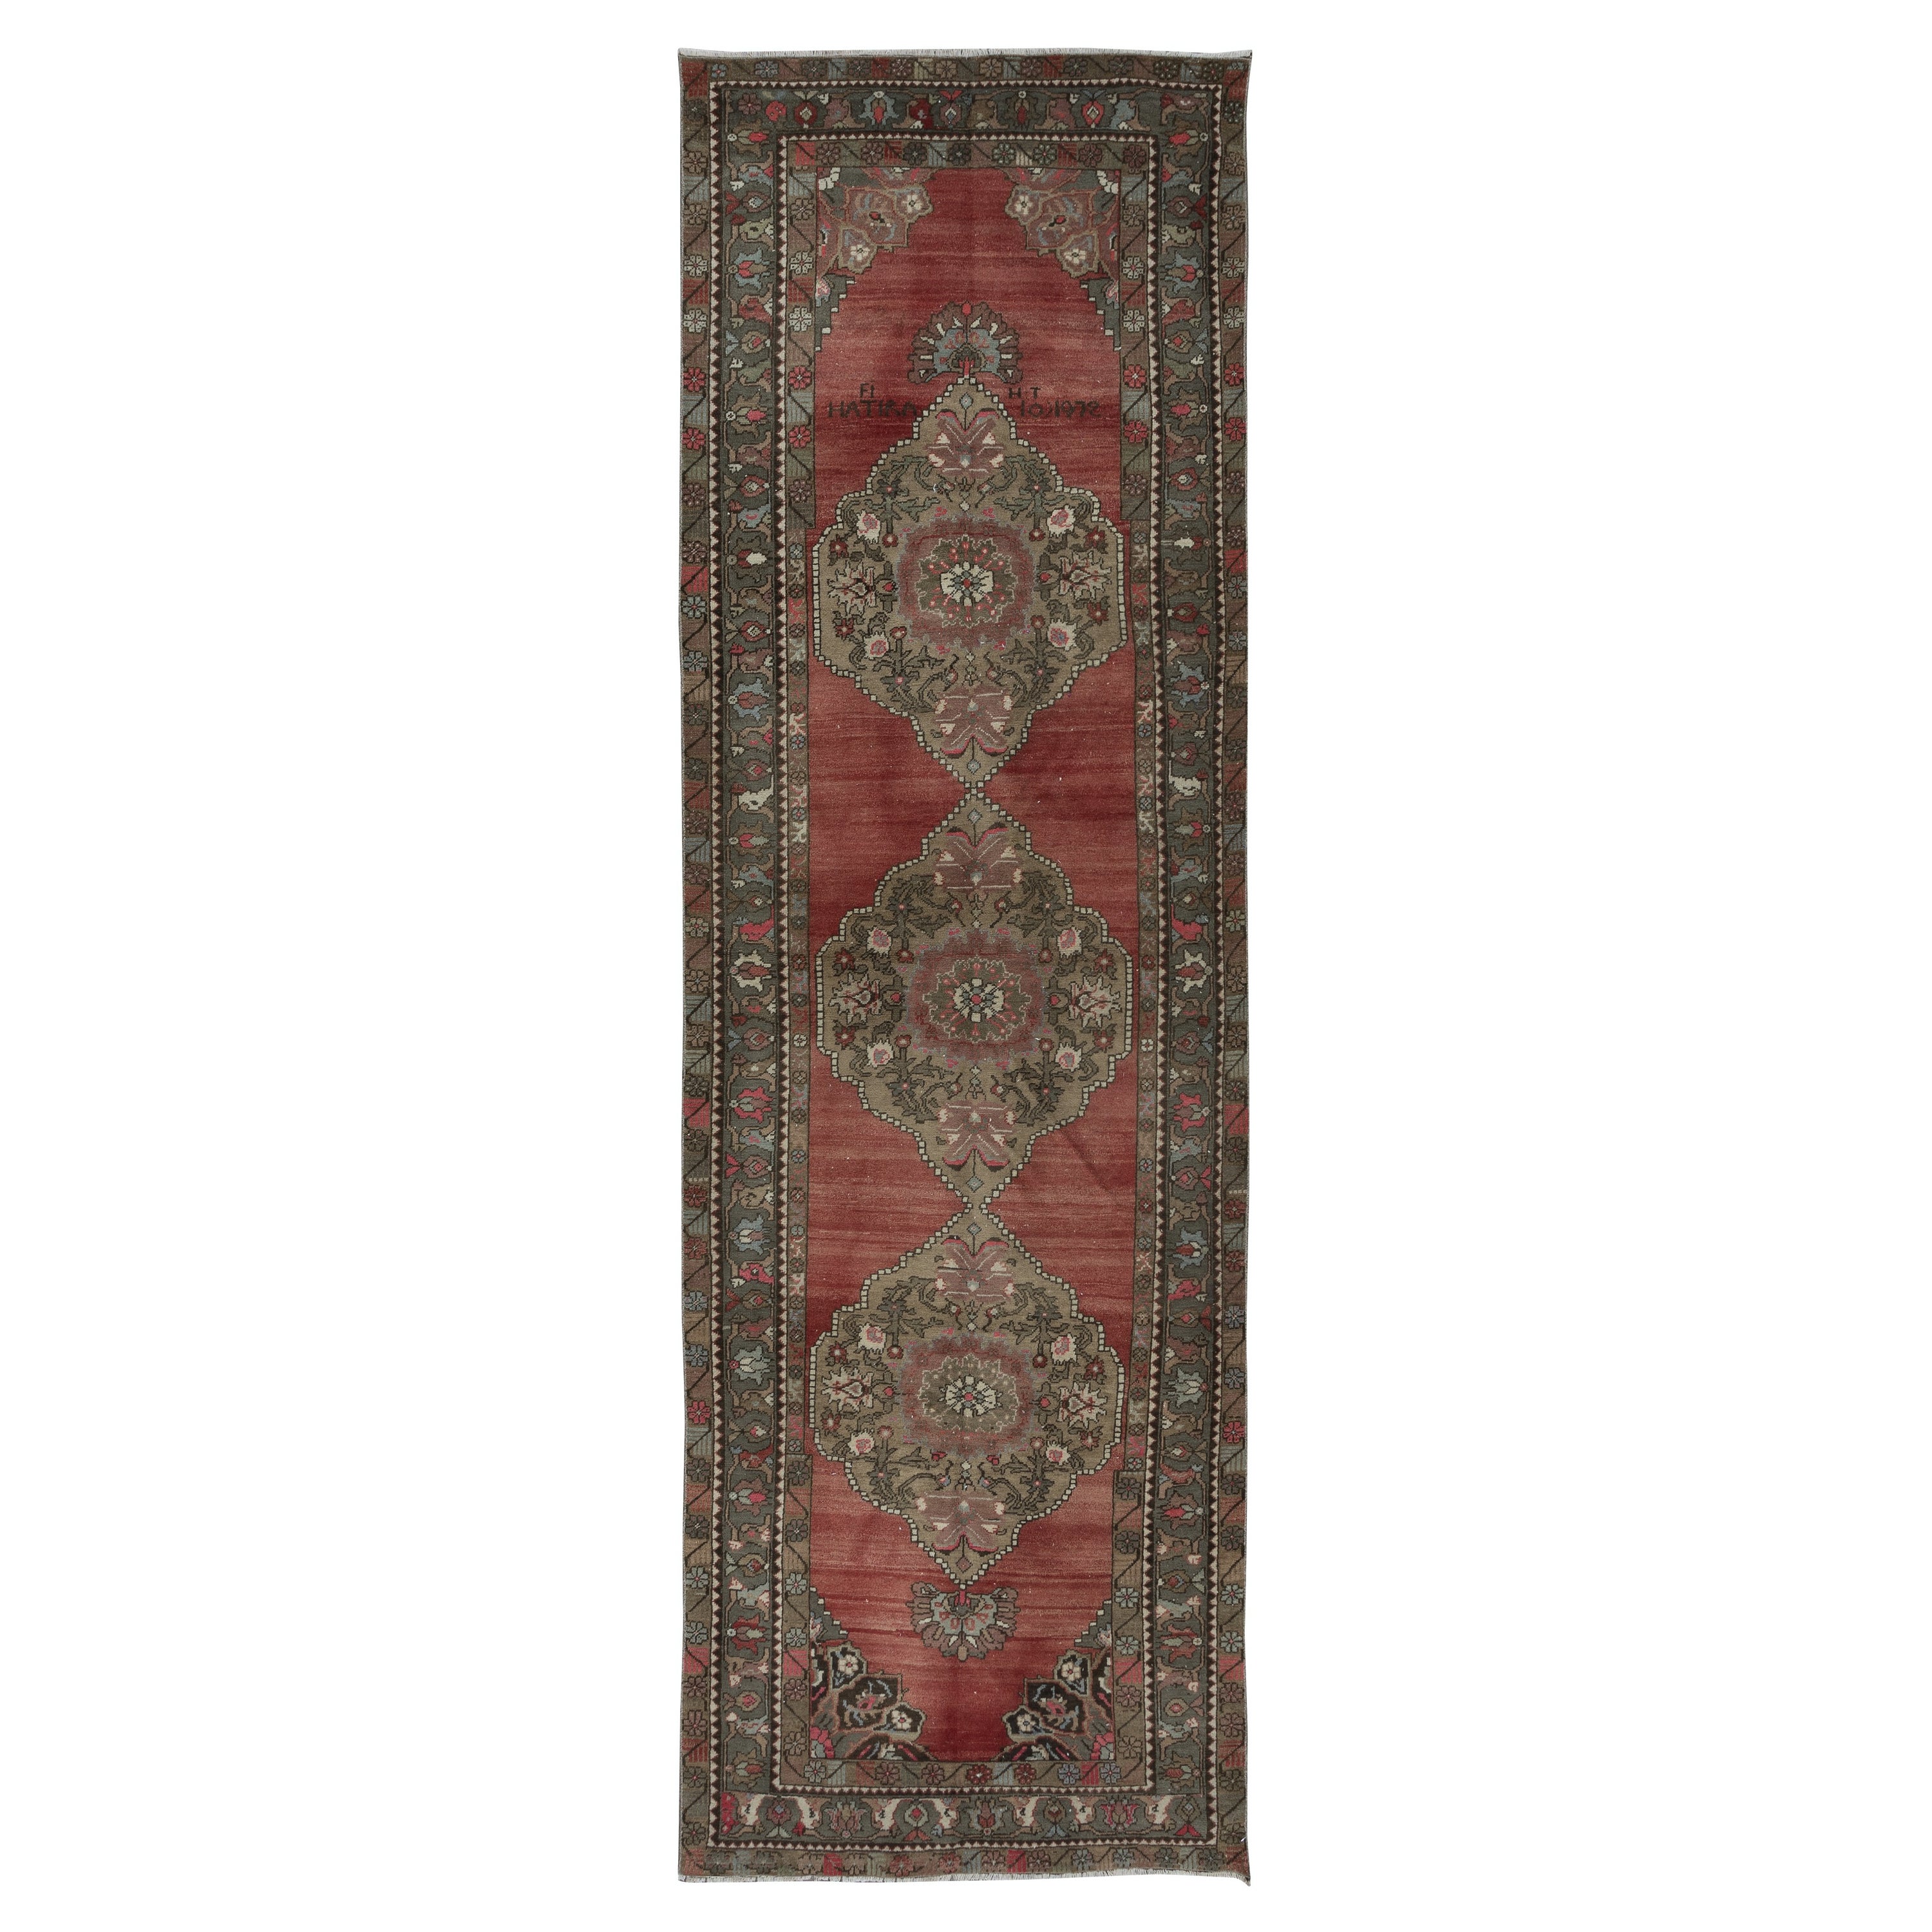 4x12.4 Ft Traditional Vintage Handmade Turkish Hallway Runner Rug, 100% Wool For Sale